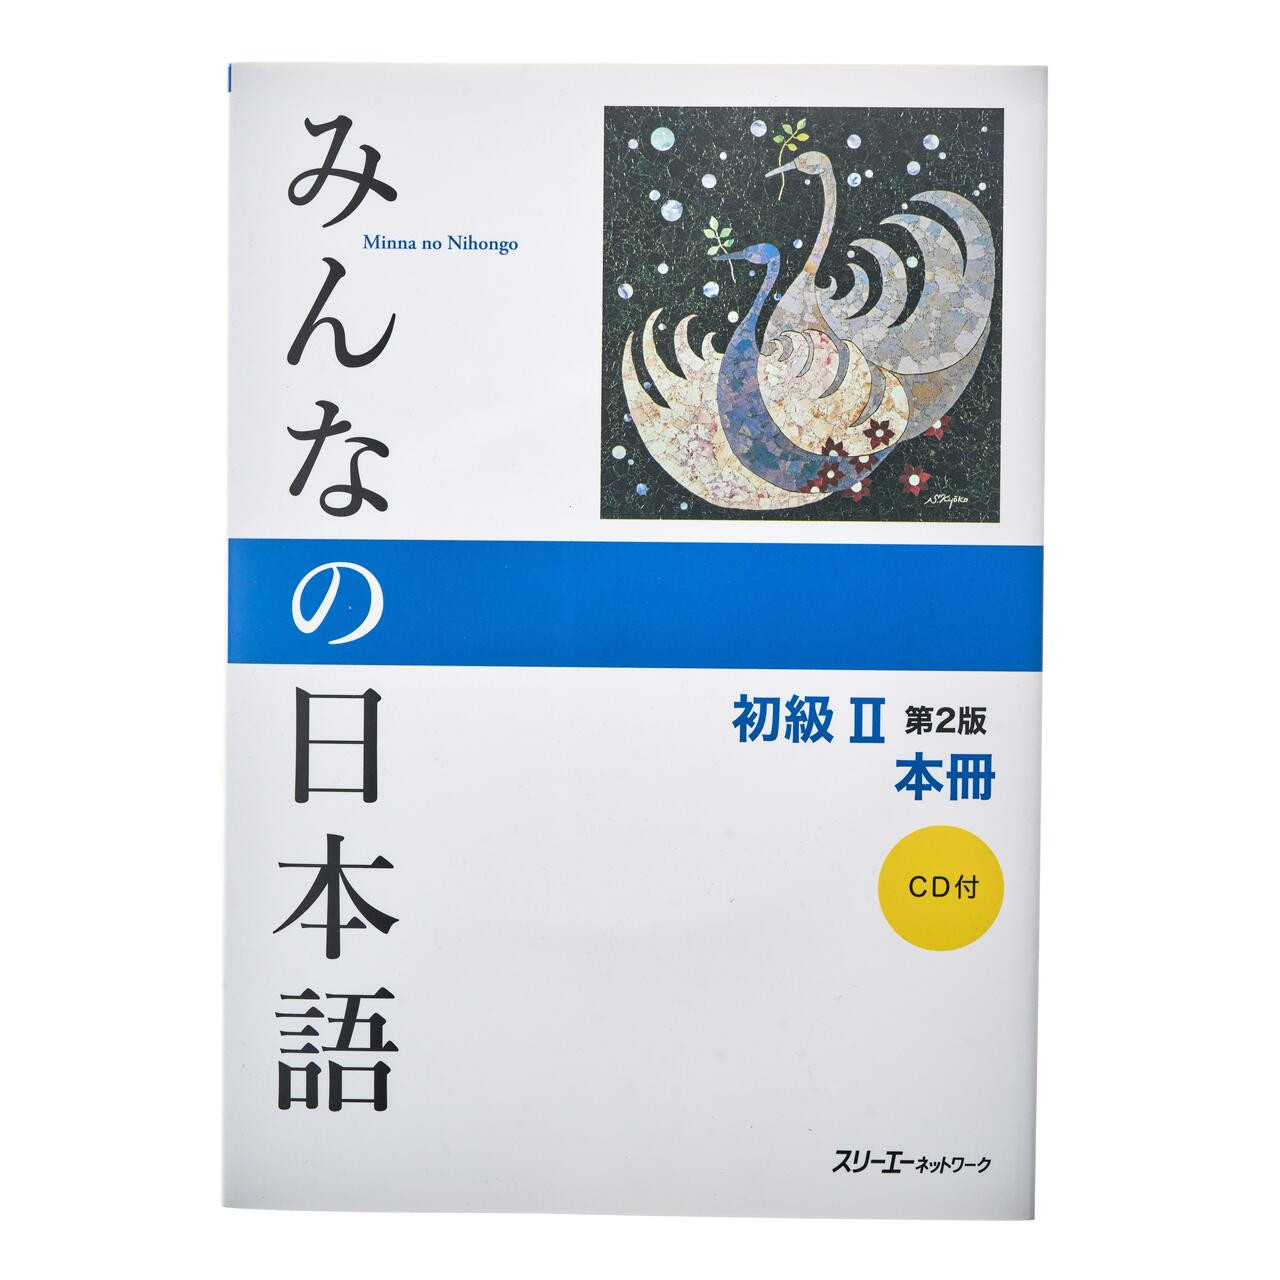 Minna no Nihongo II 2nd Edition Main Textbook 700 g ジャパンセンター